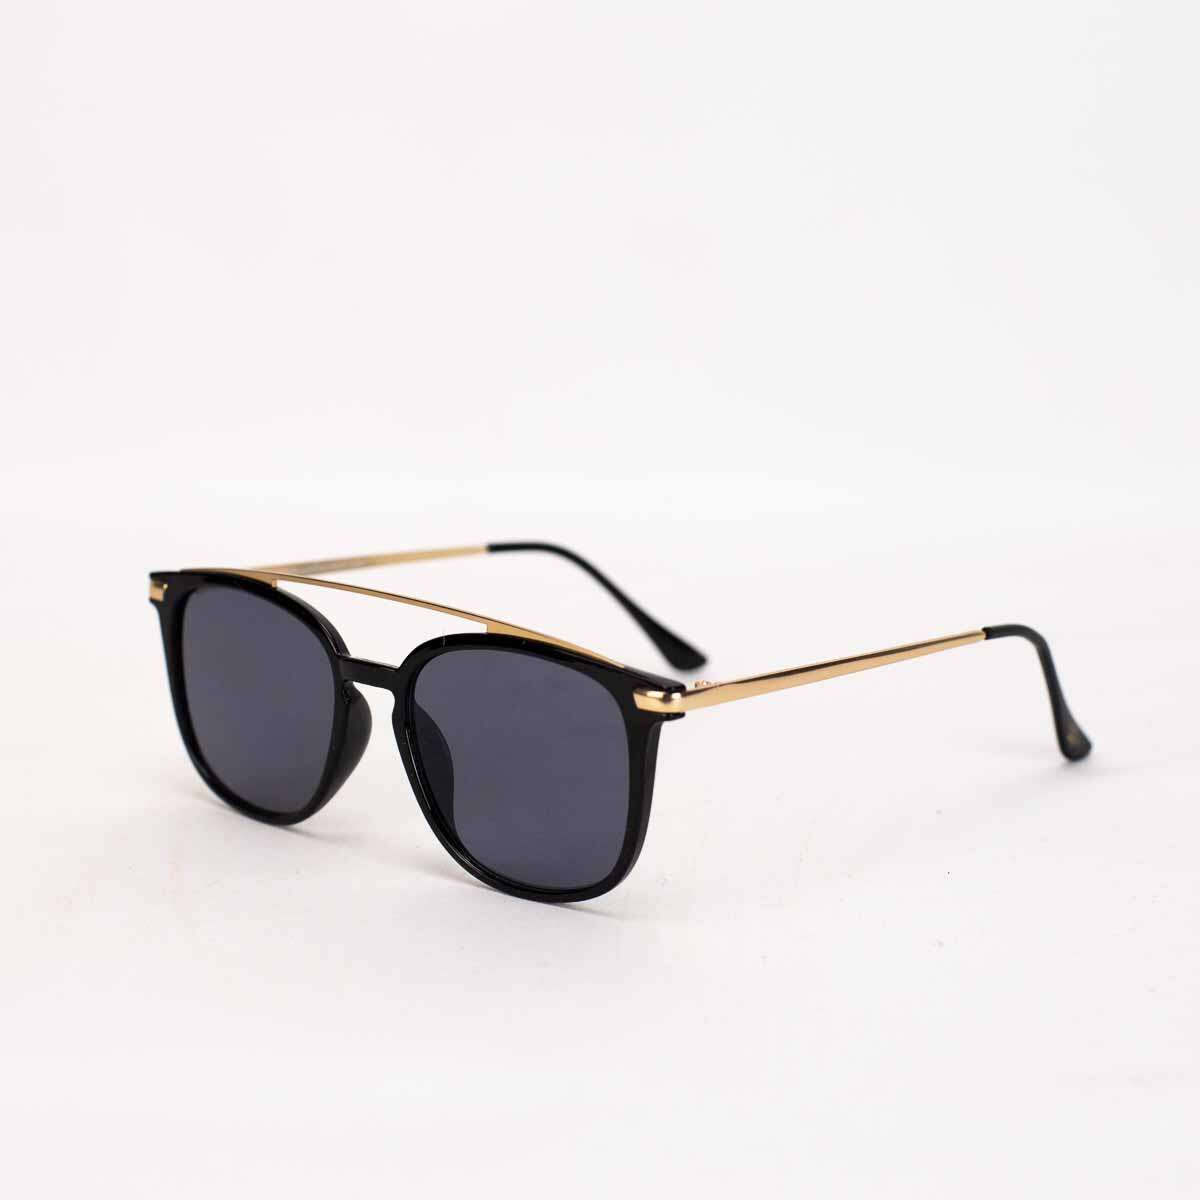 Marlowe Sunglasses   Gold/Black   One Size